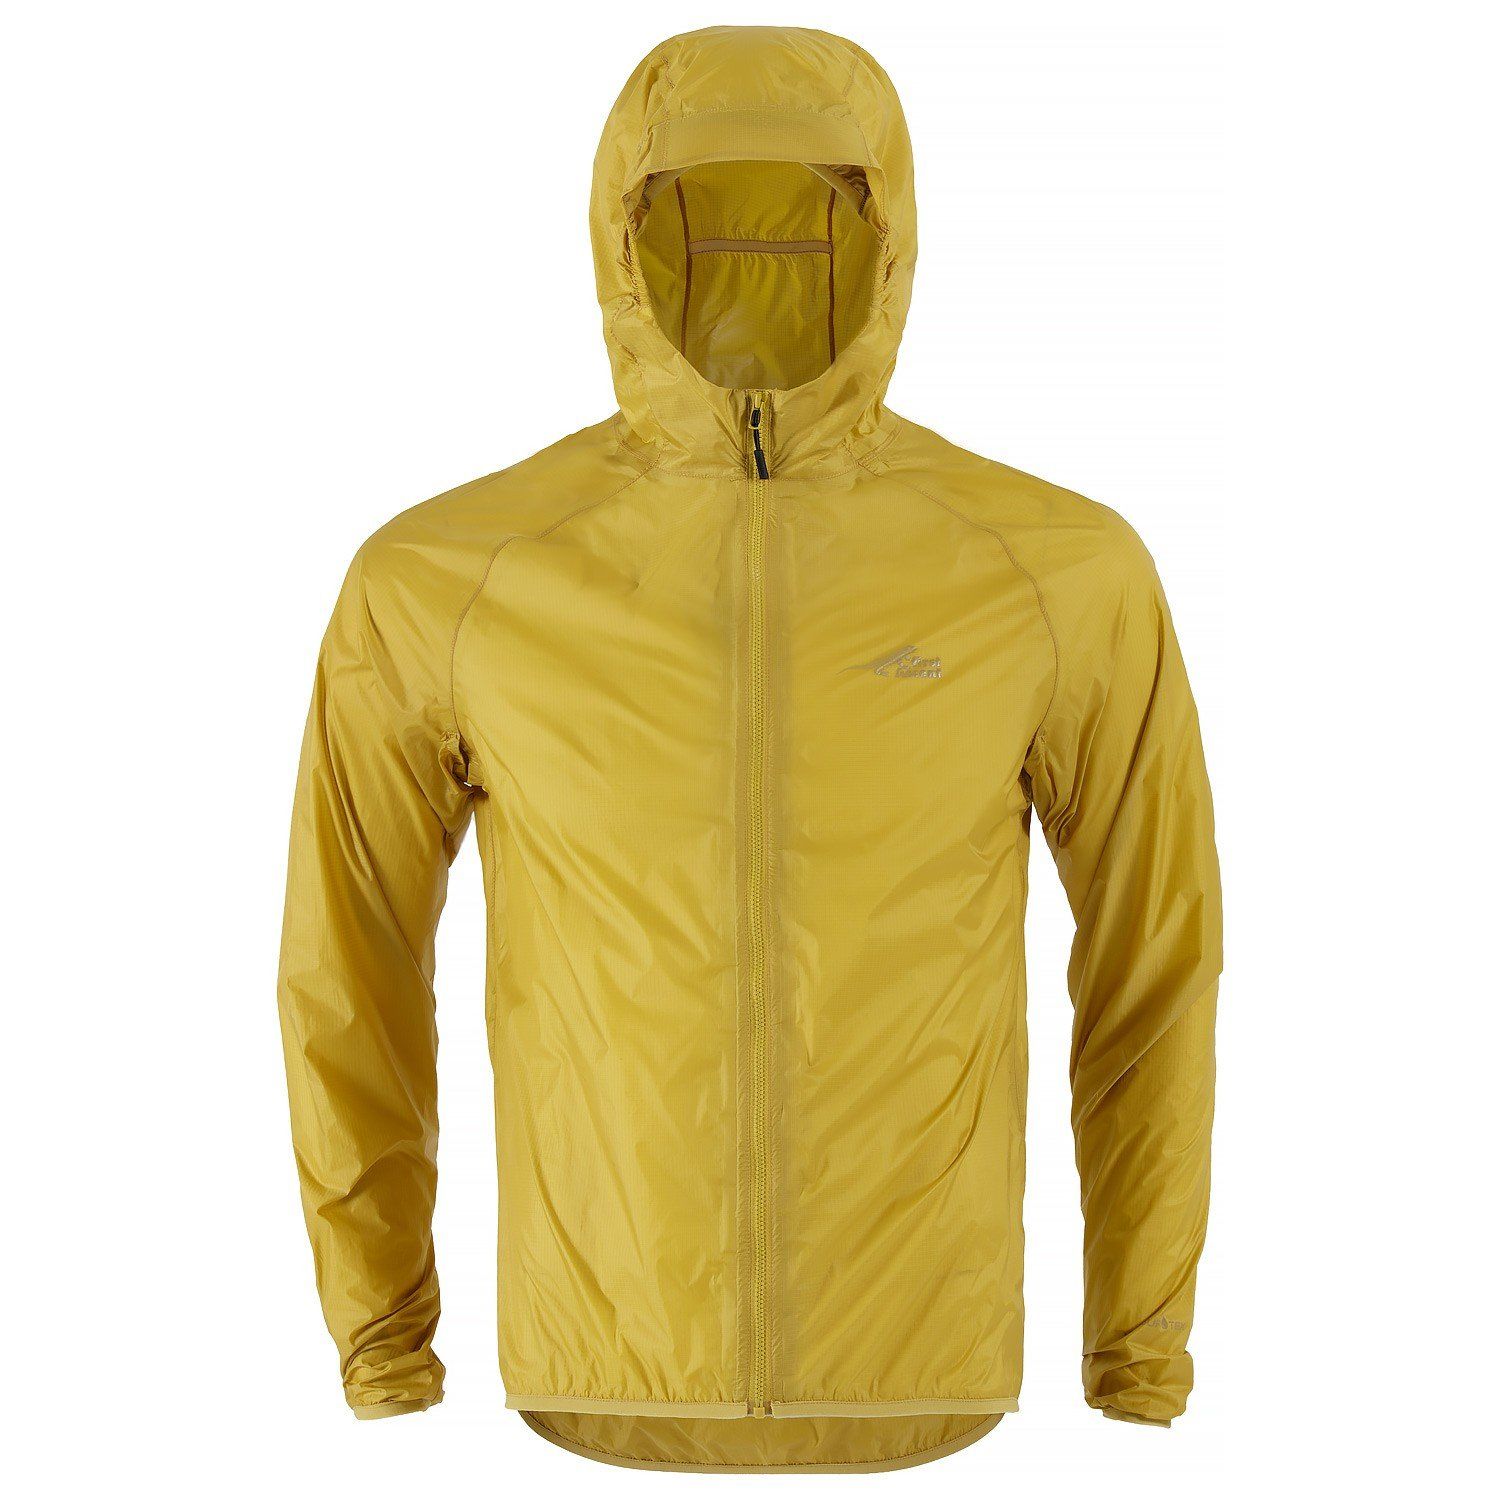 X-trail Running Jacket - Yellow